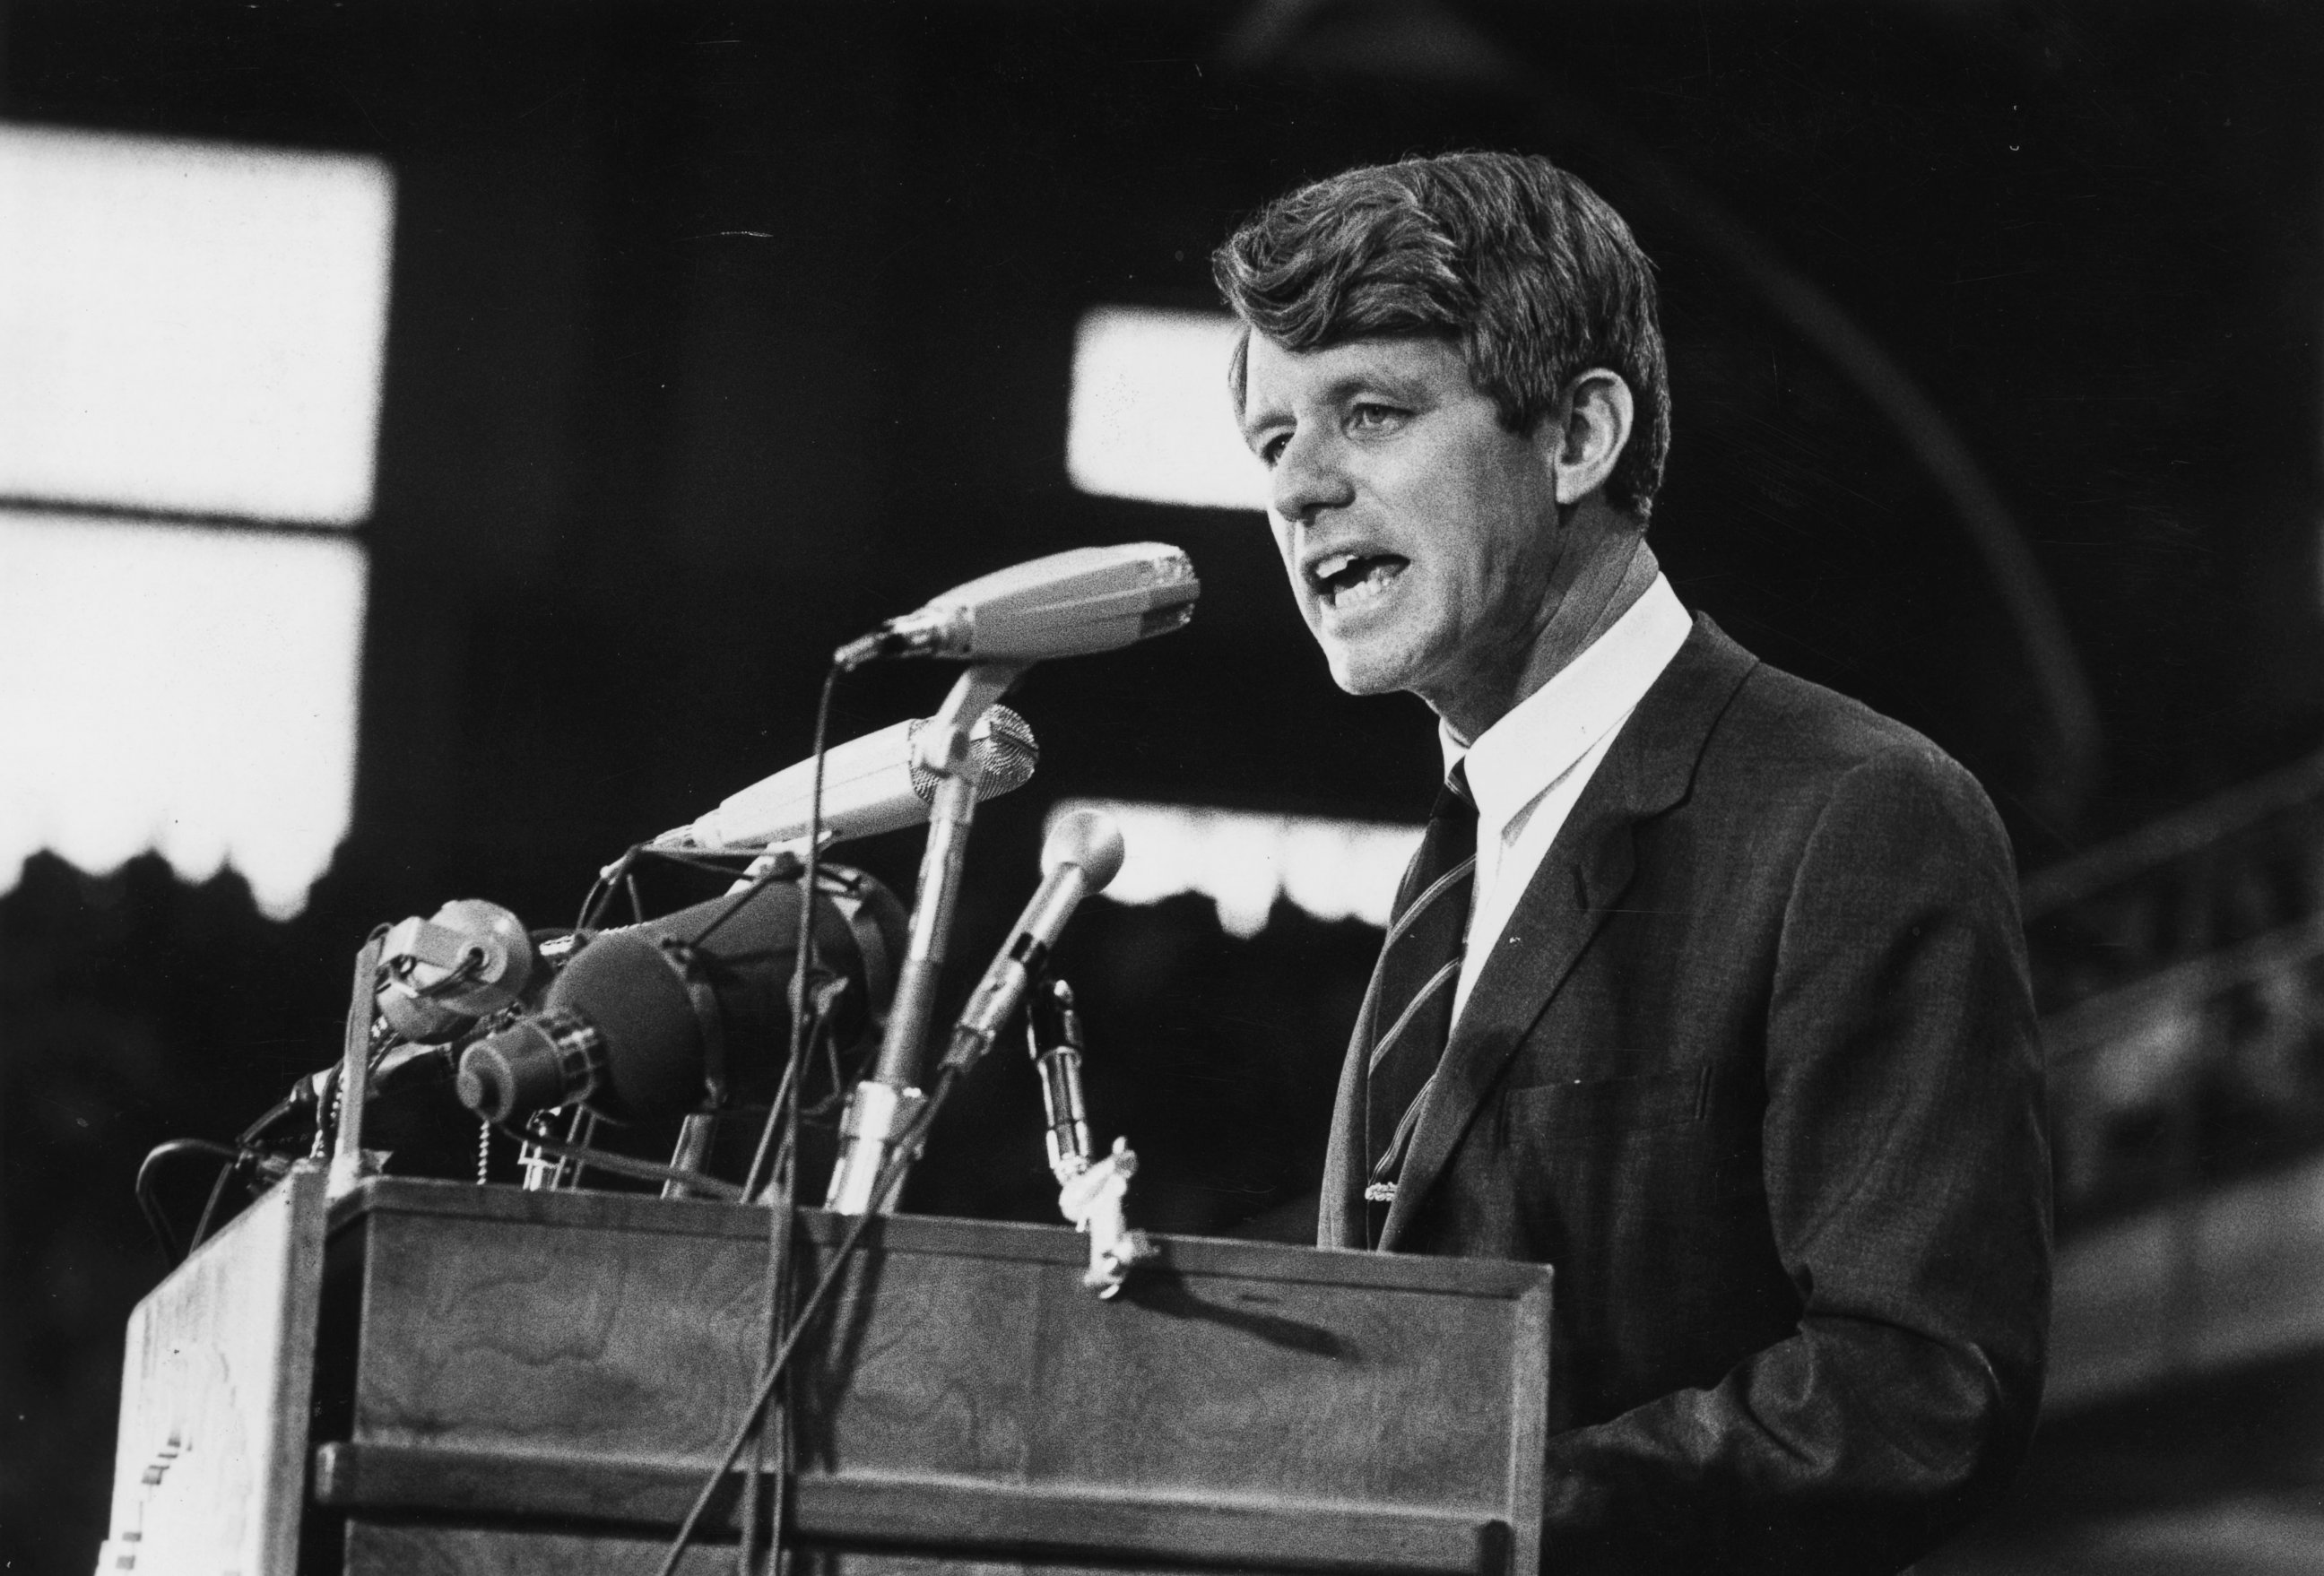 PHOTO: Senator Robert Kennedy speaking at an election rally, 1968.